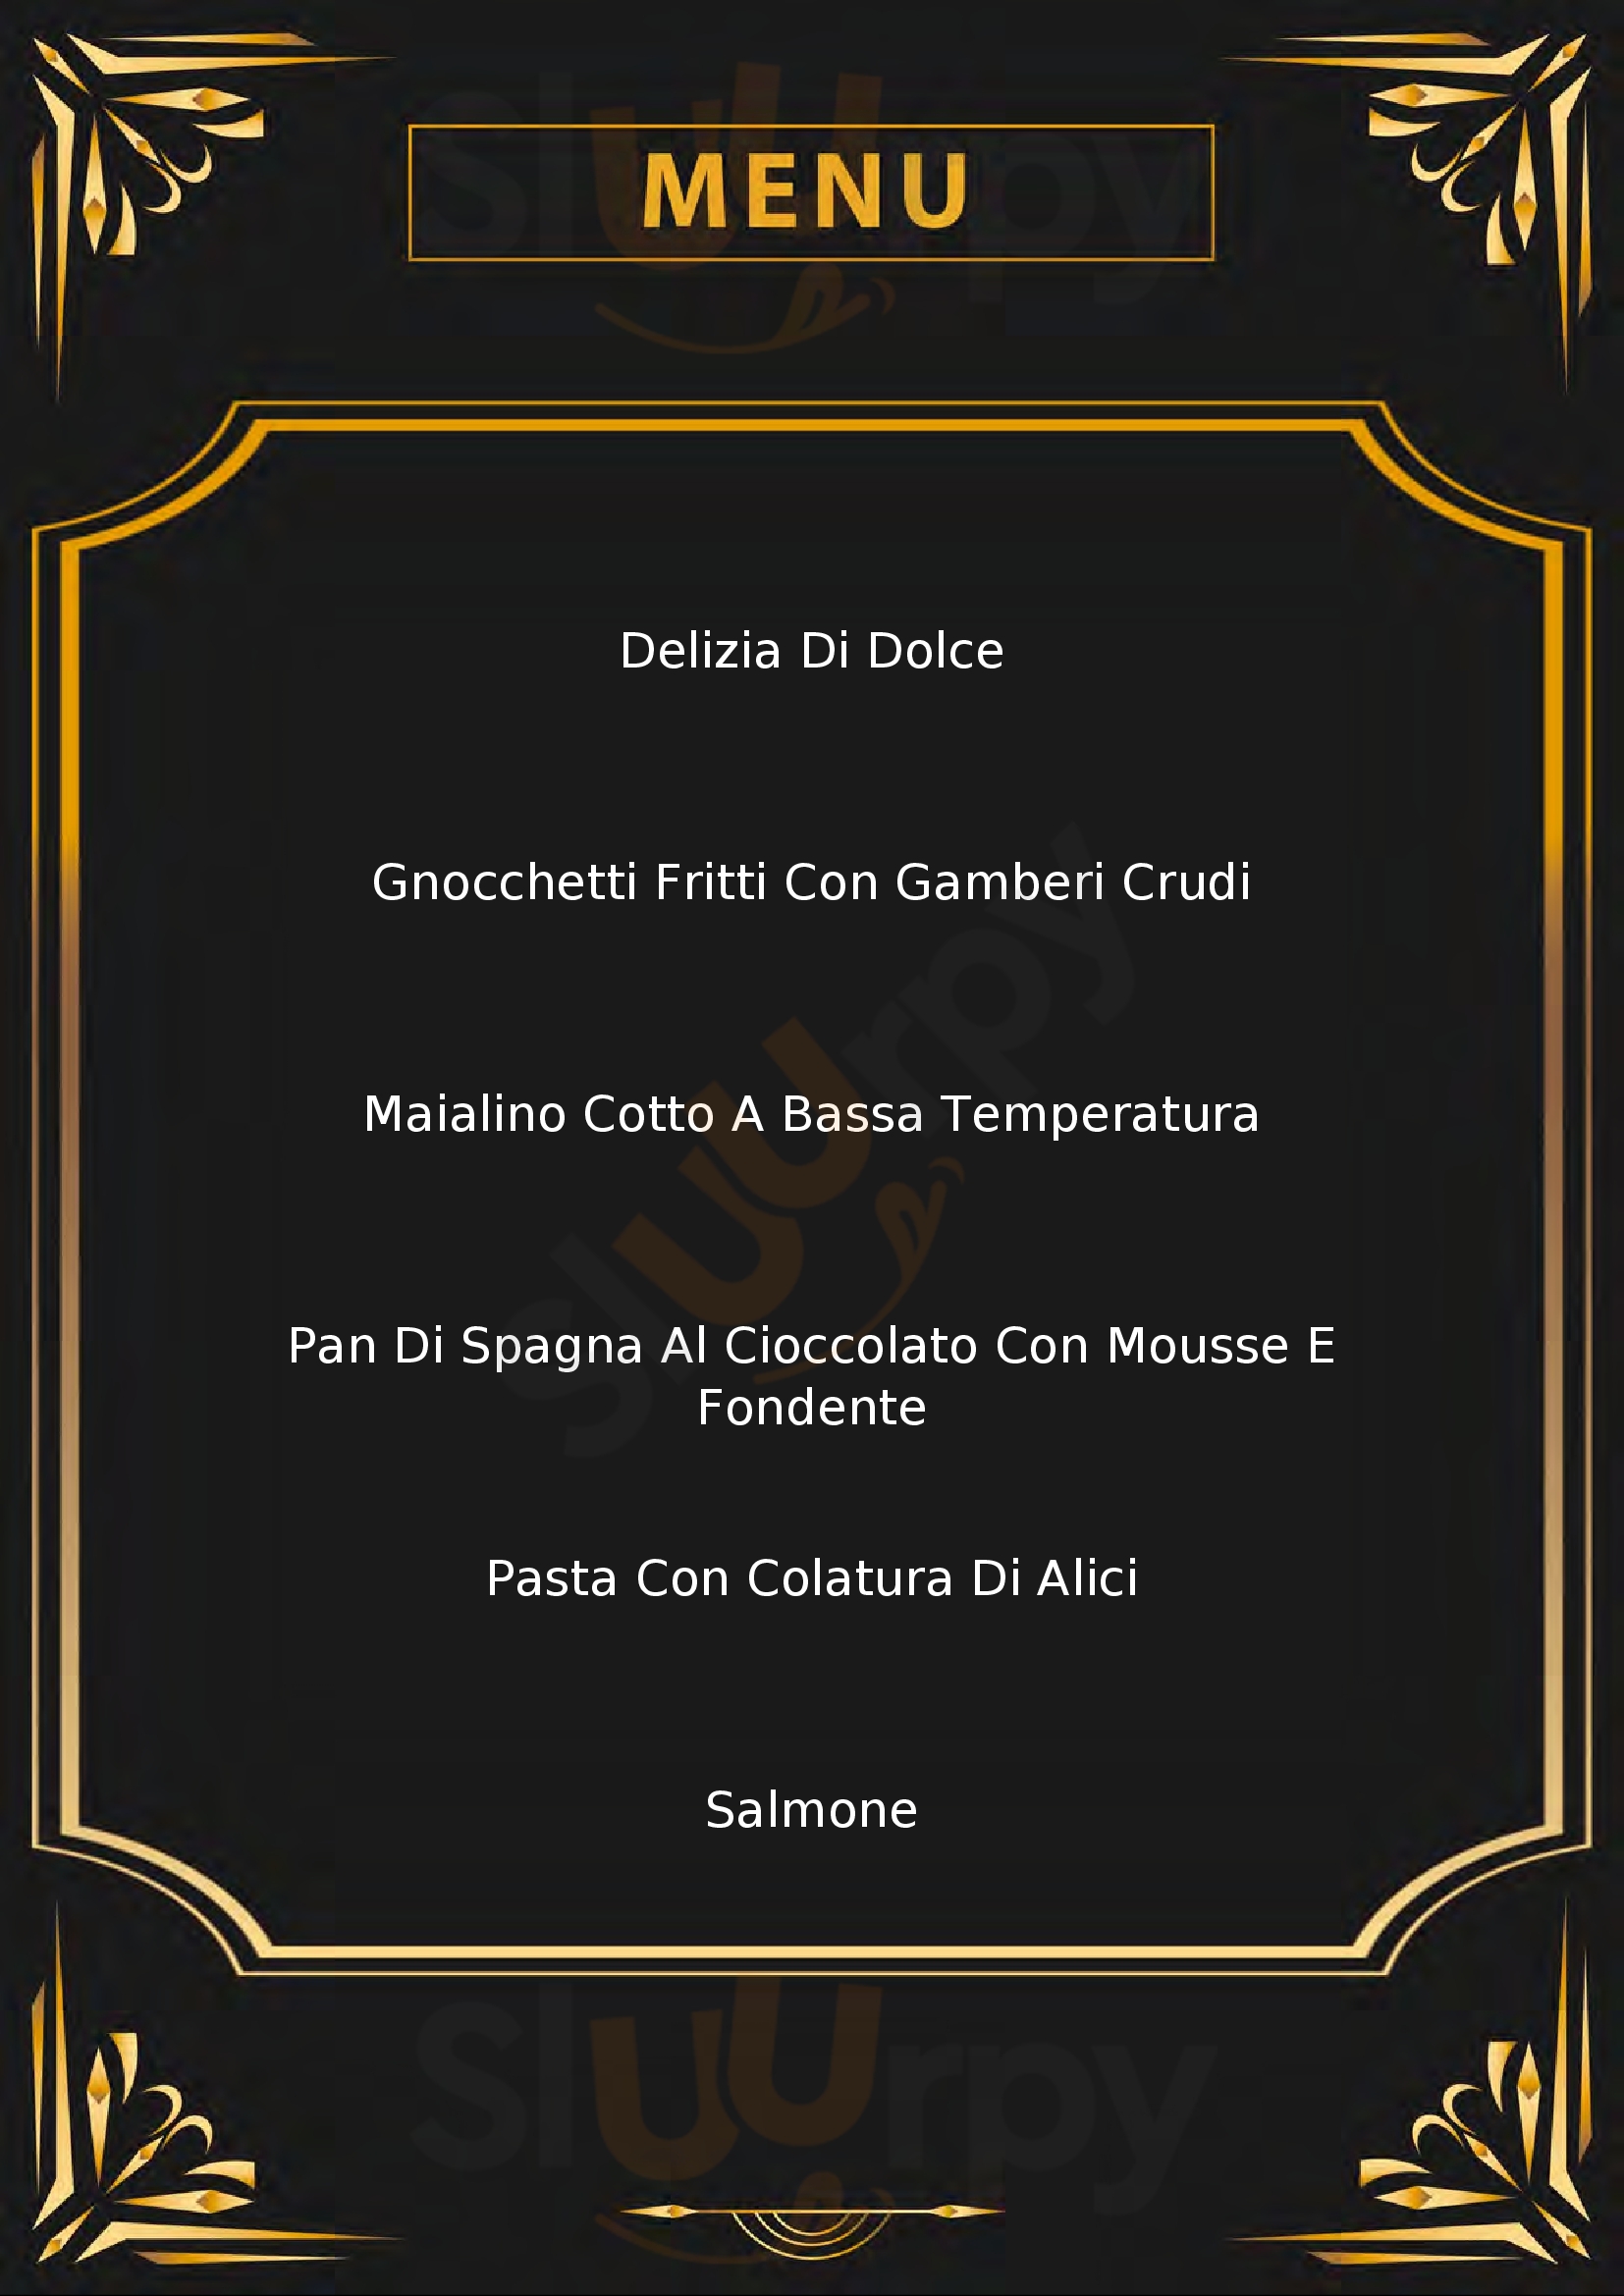 Casa Perrotta Restaurant Cernobbio menù 1 pagina